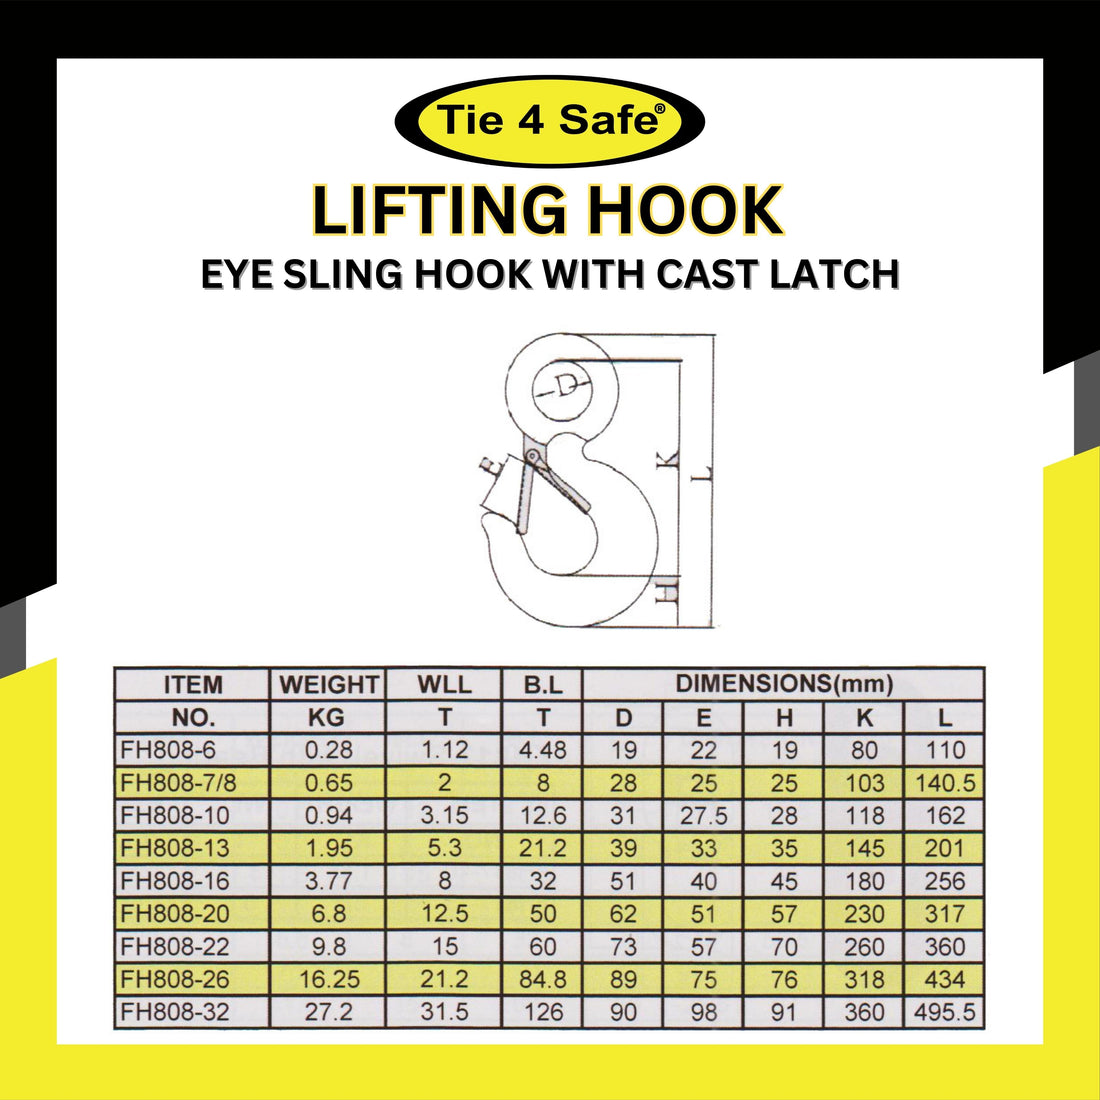 Eye Sling Hook With Cast Latch